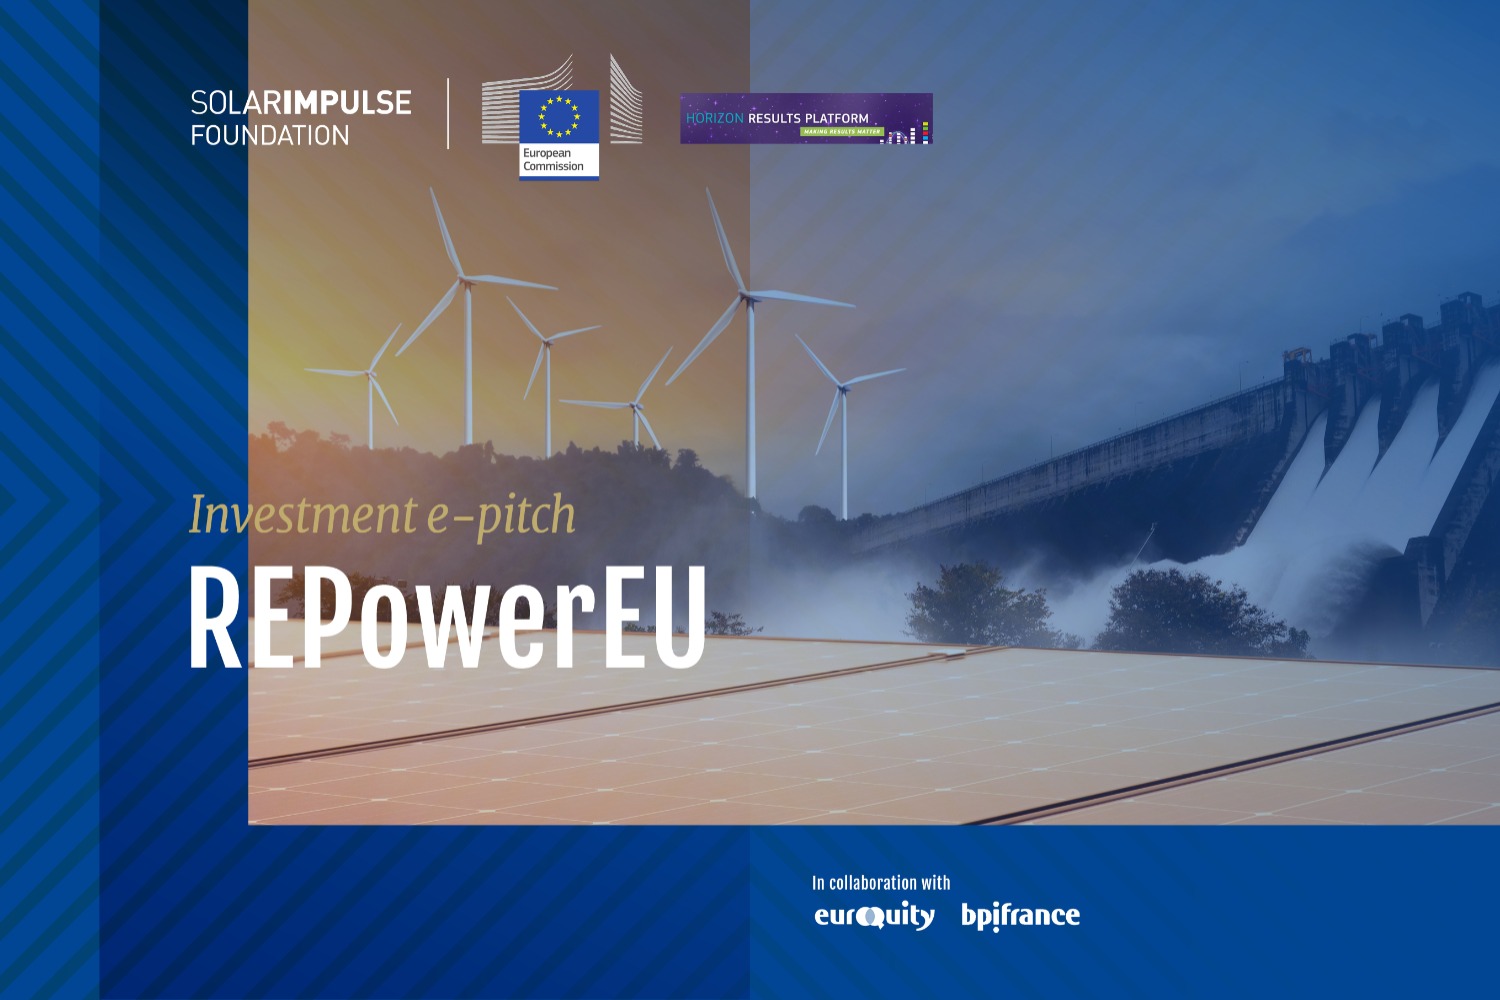 European Commission x Solar Impulse Foundation investment e-pitch